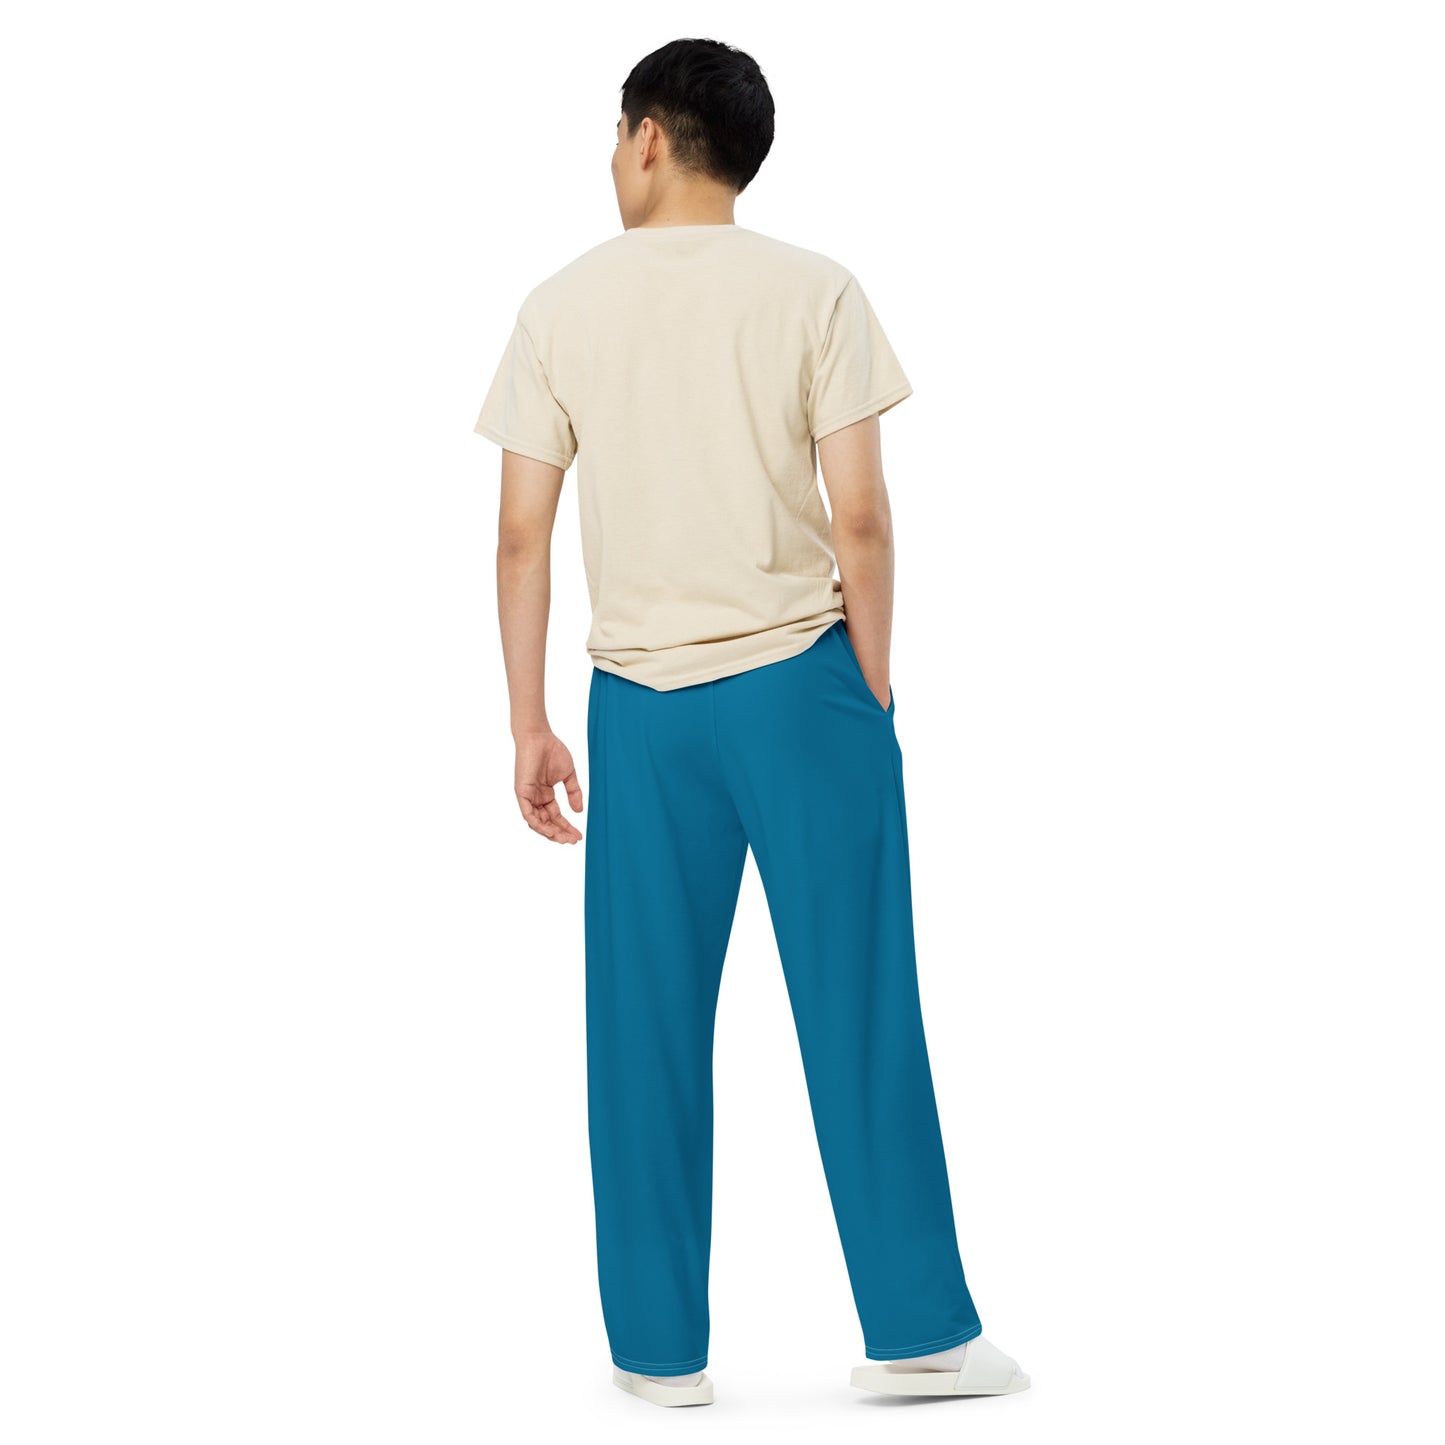 GymWidowz unisex wide-leg pants - Cerulean Blue